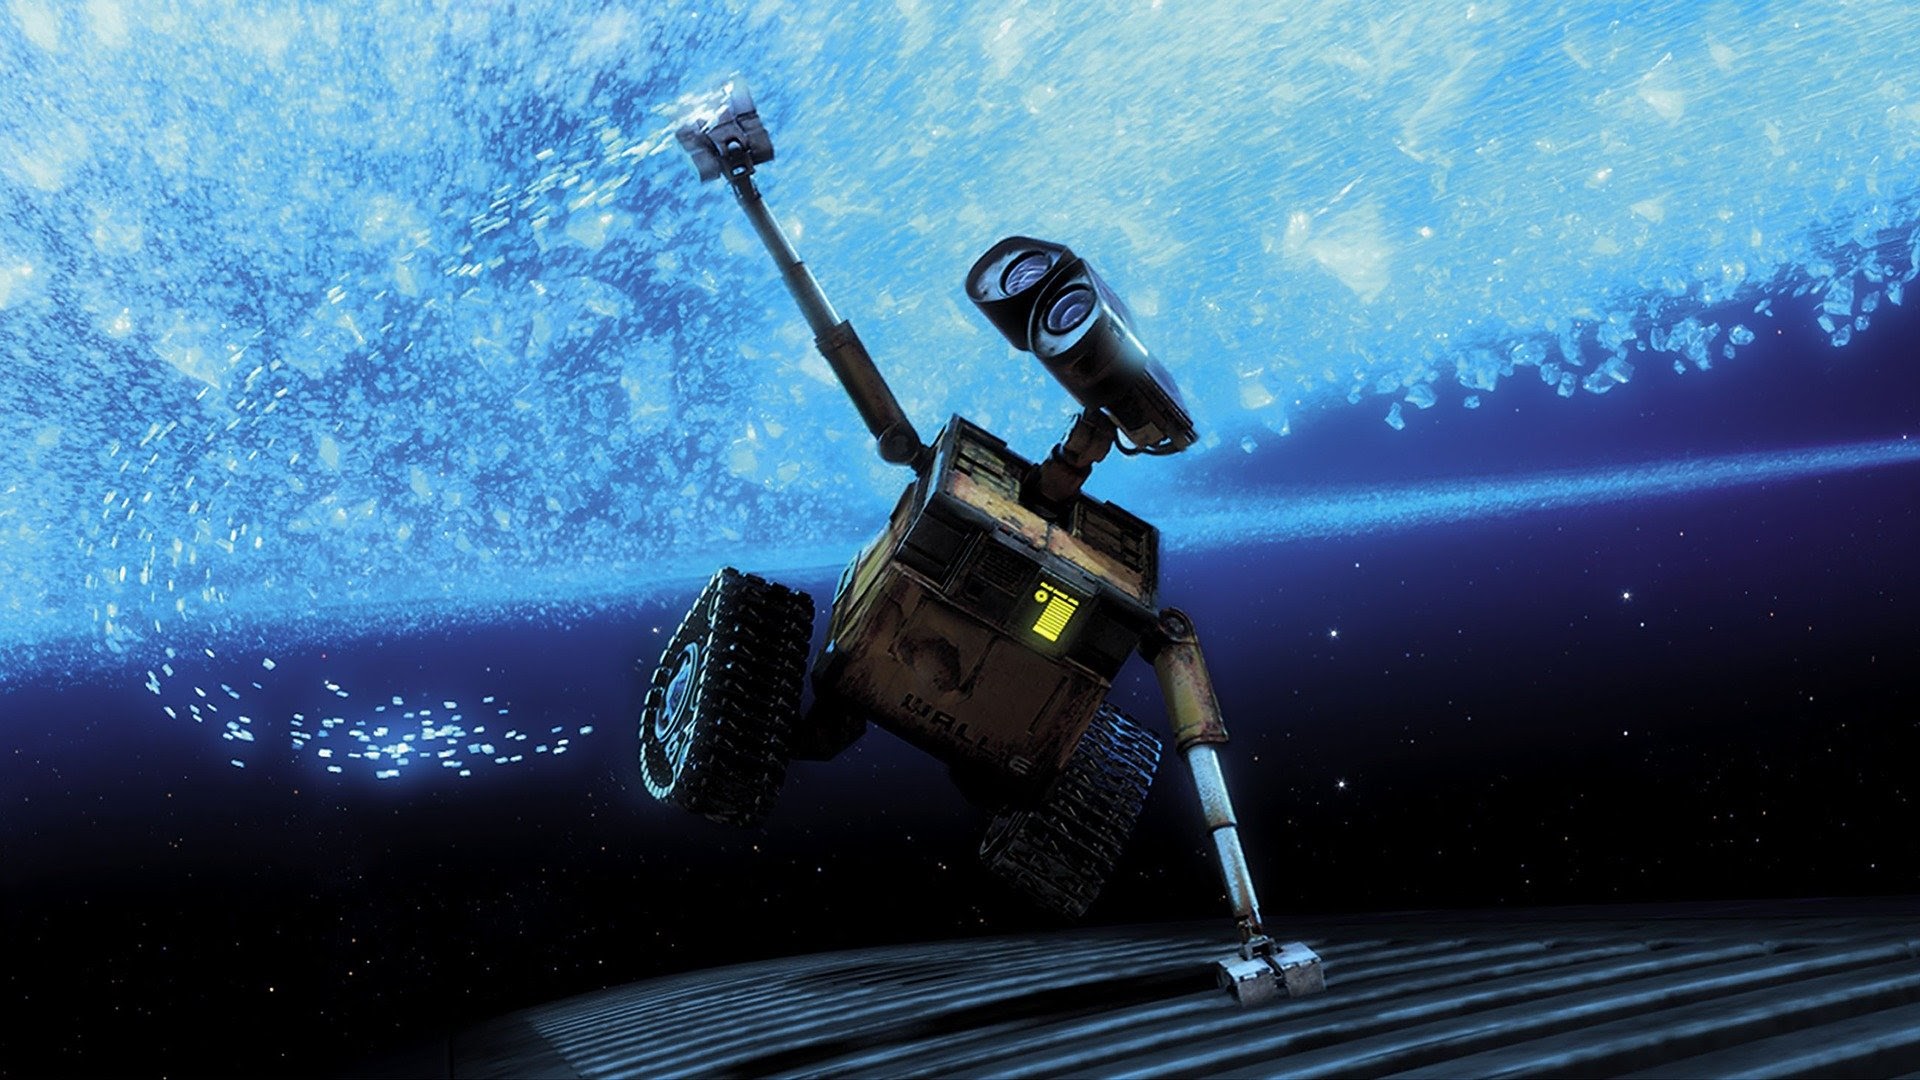 Watch WALL-E